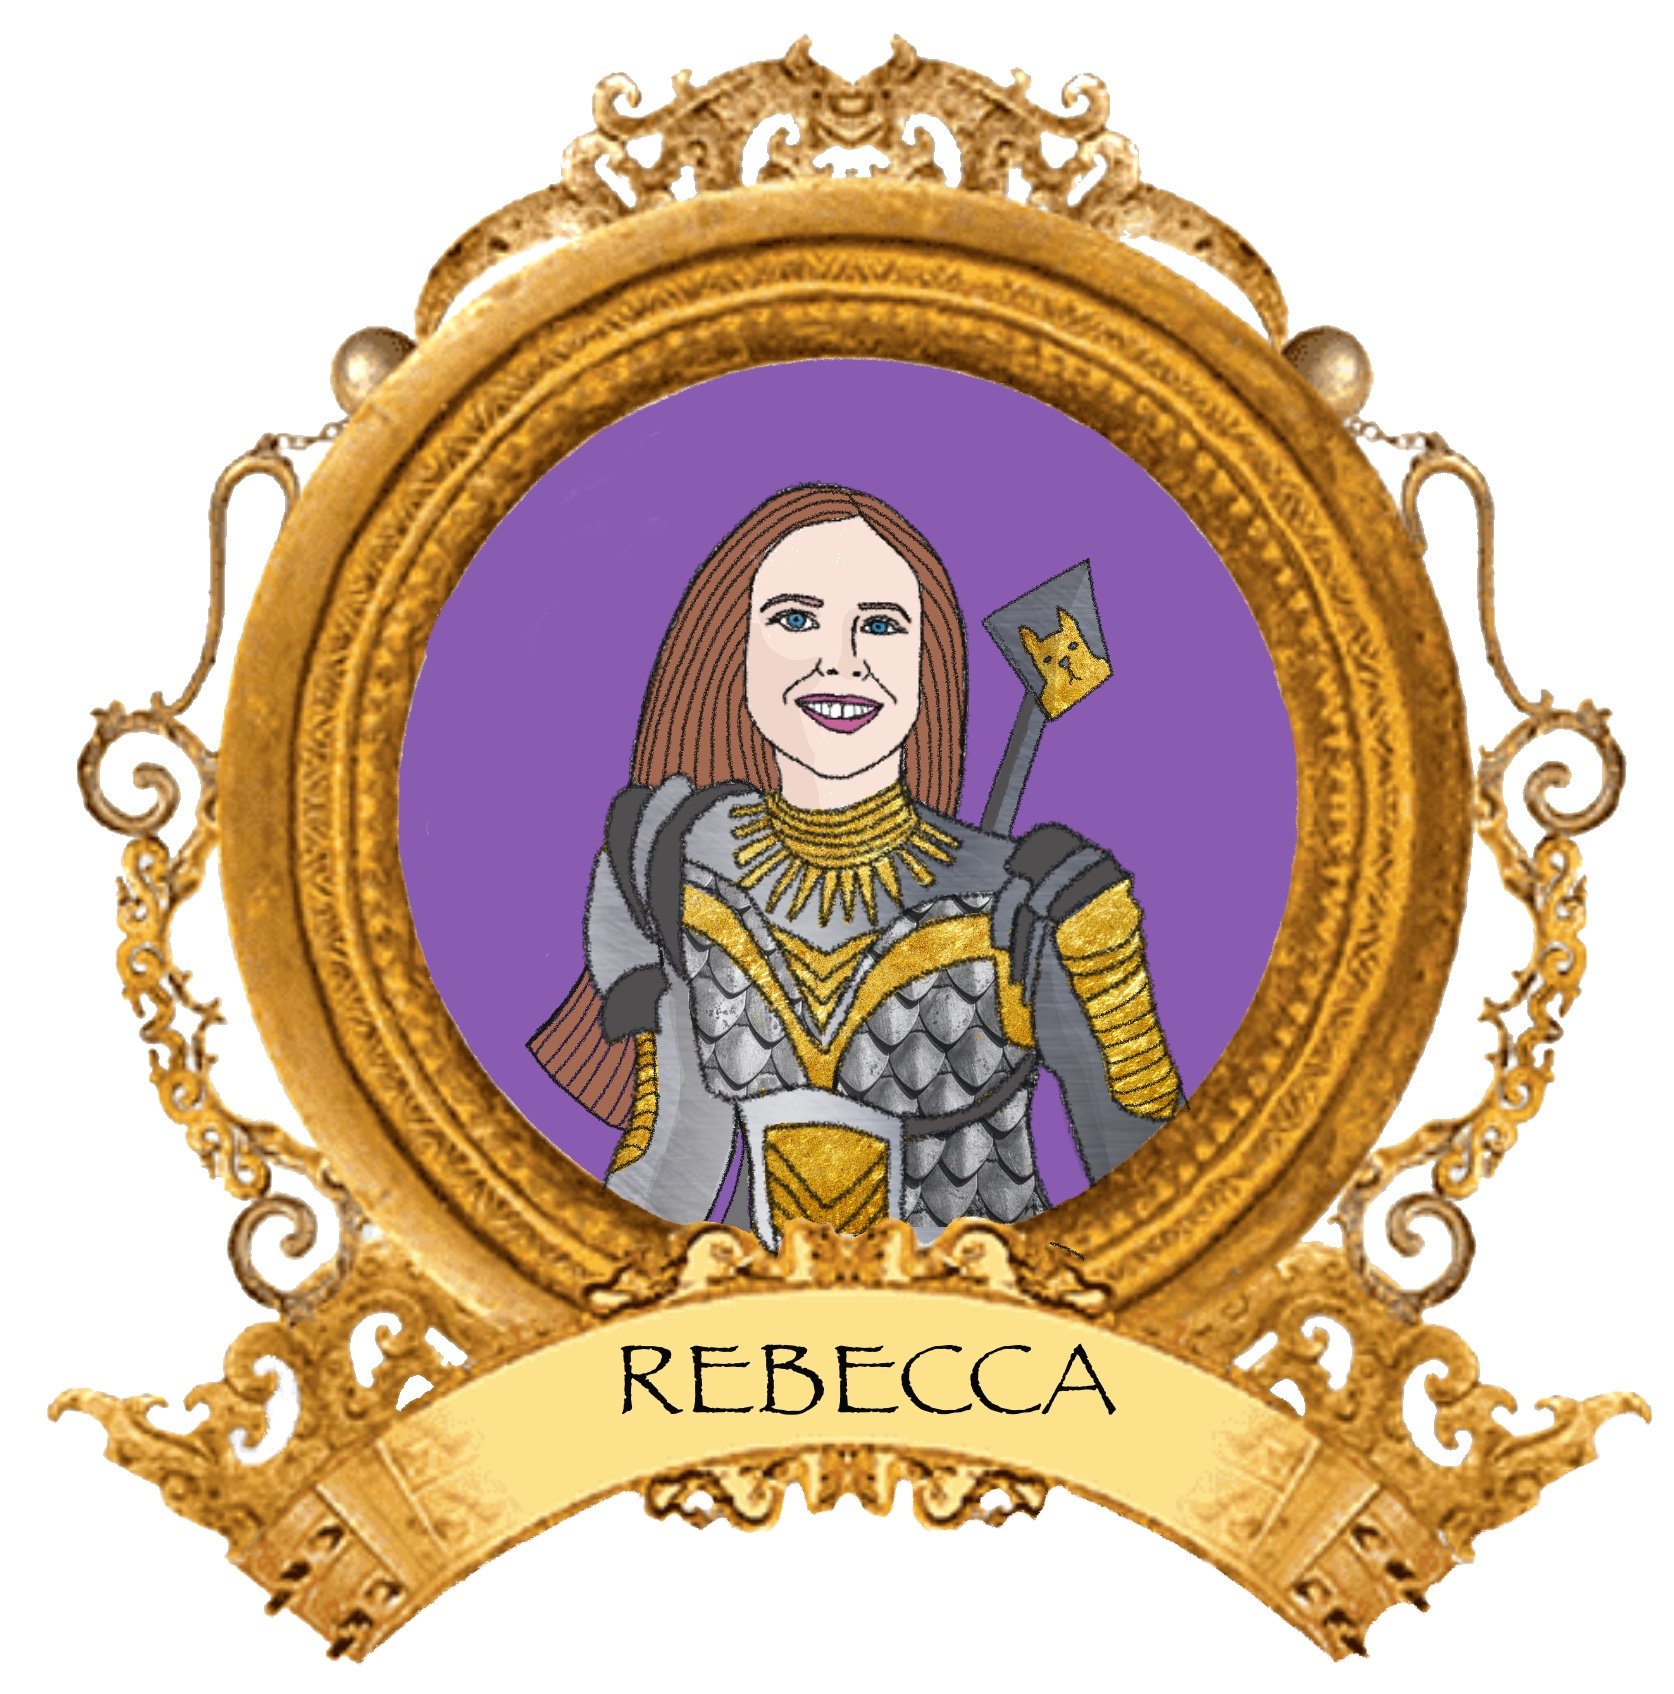 Rebecca.jpg